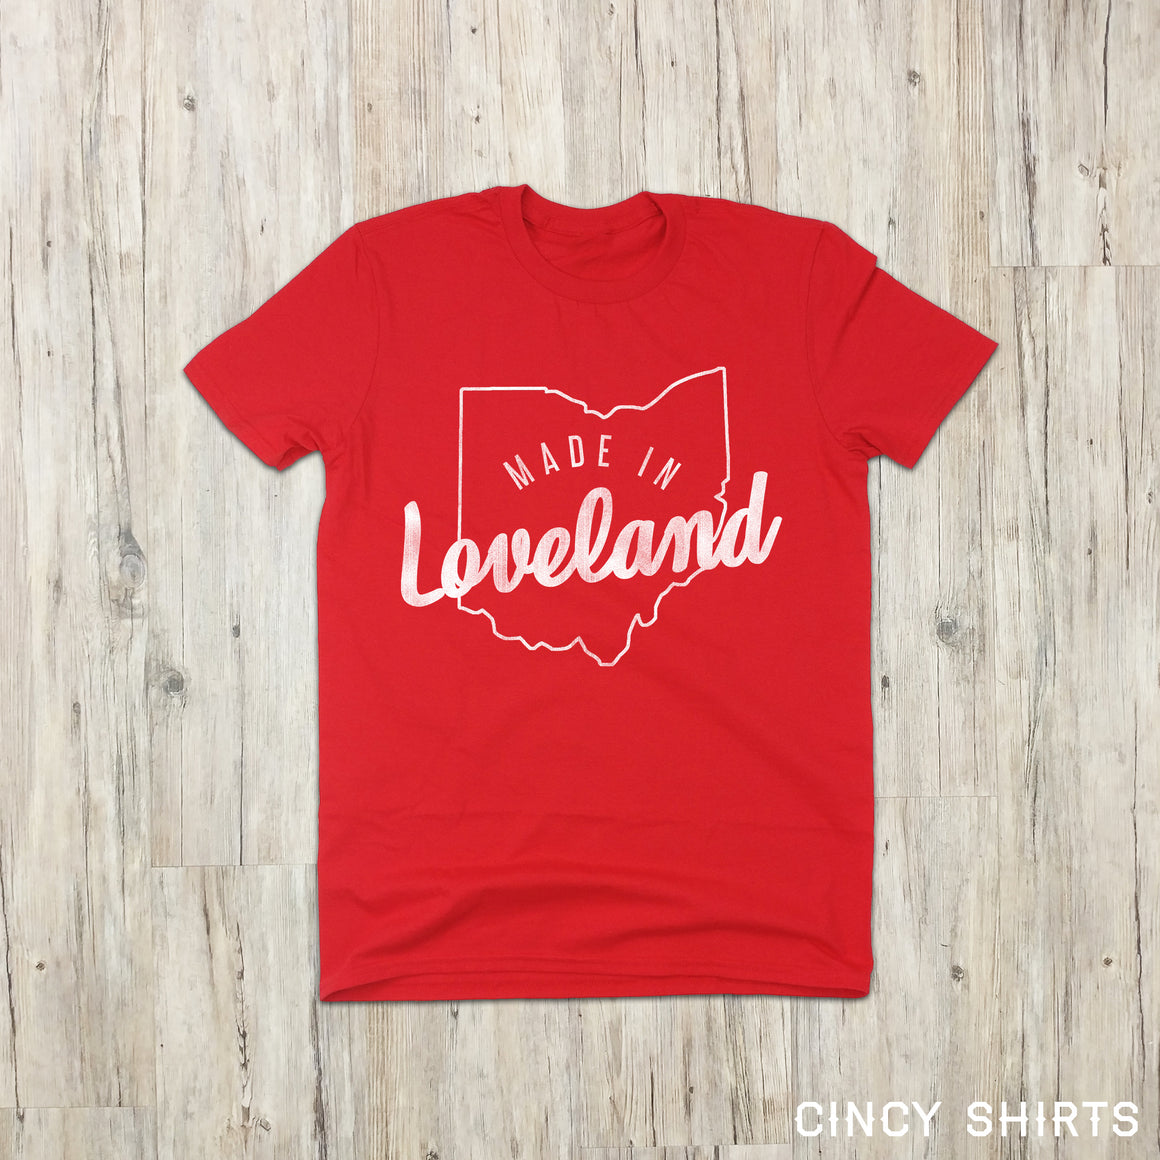 Made In Loveland - Cincy Shirts